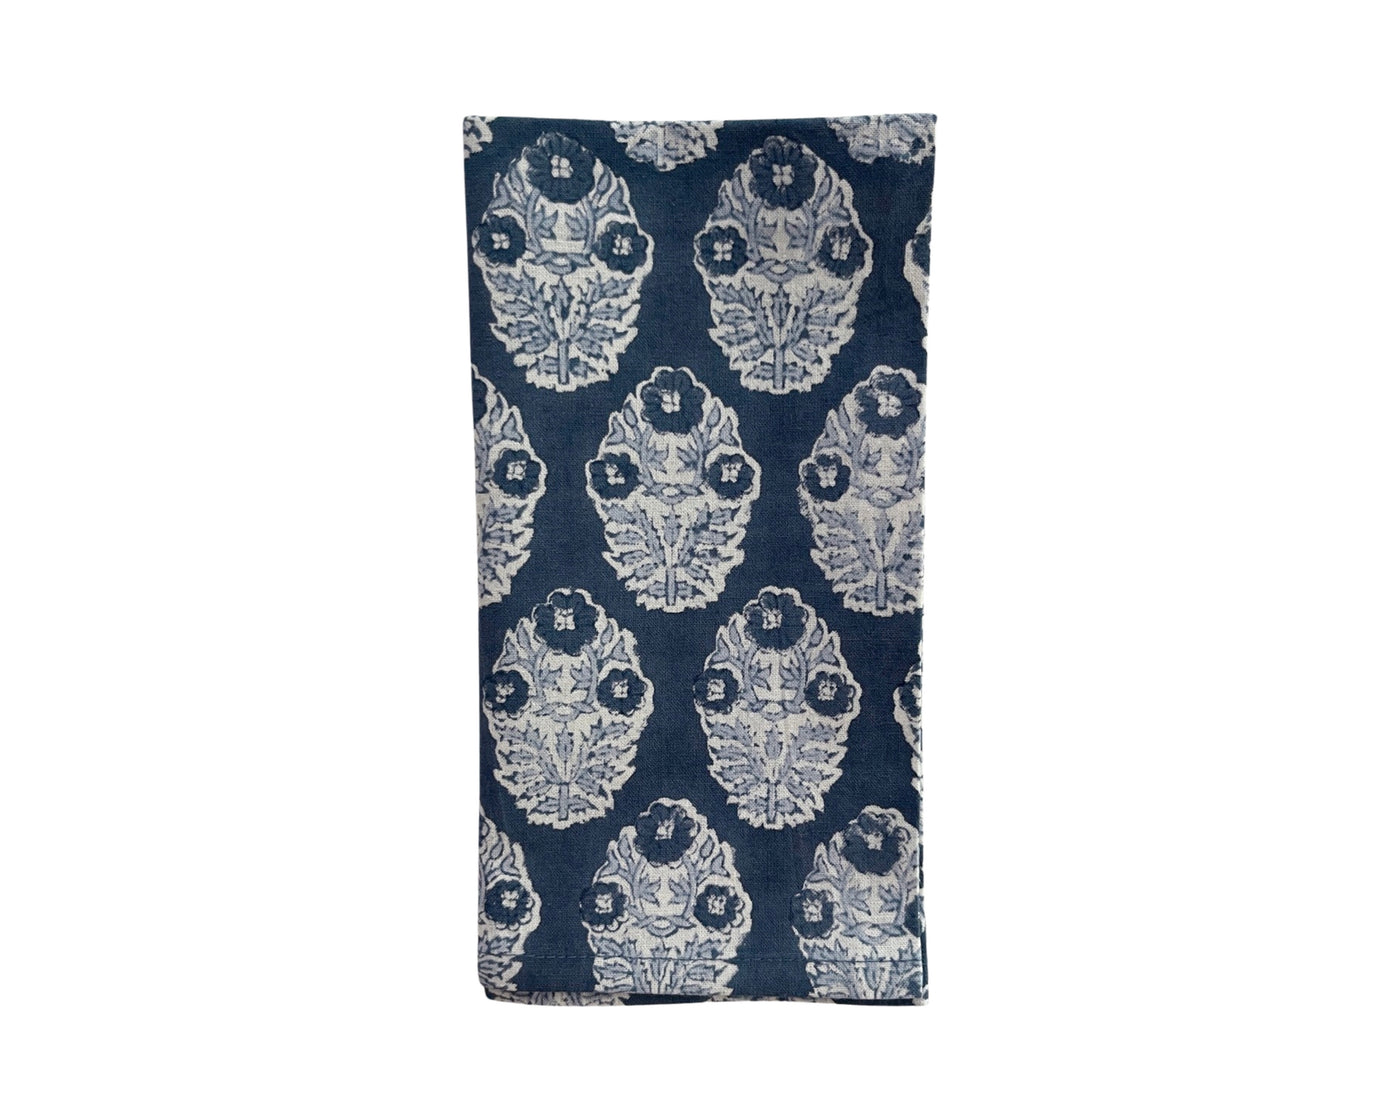 Set of 4 Hand Block Printed Cloth Napkin - 'Poppy' Navy